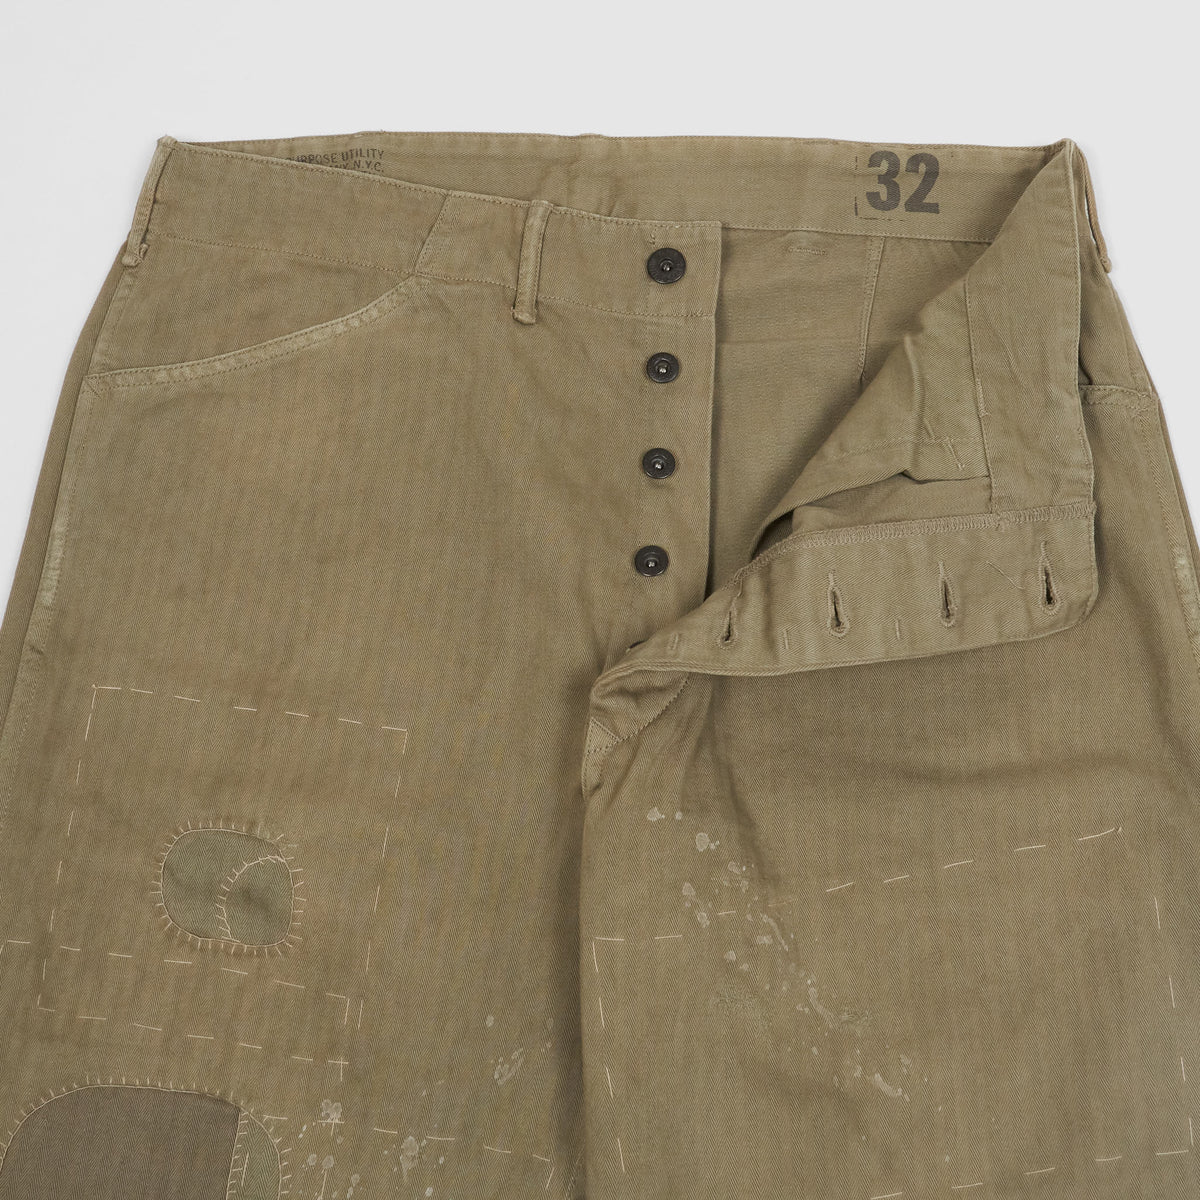 Double RL U.S Military Distressed Pants